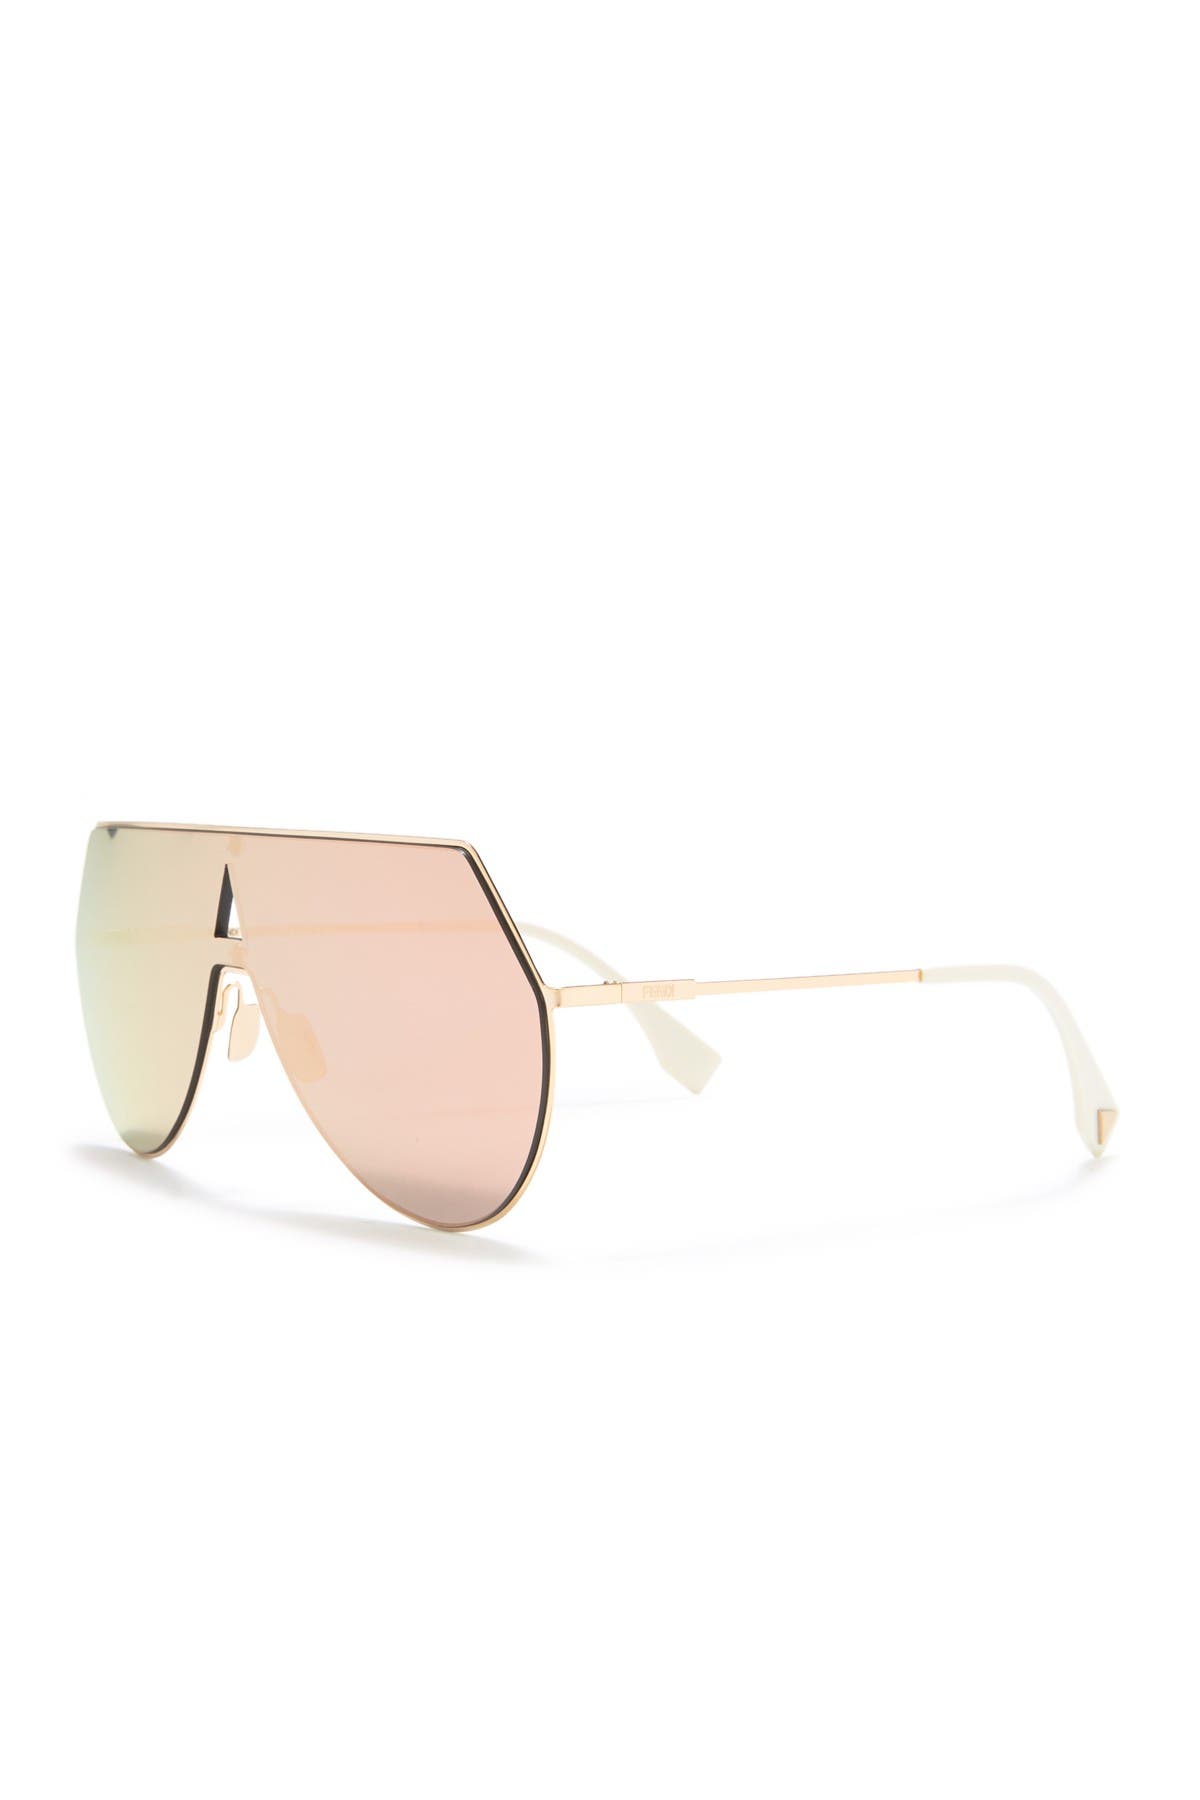 FENDI | 99mm Shield Aviator Sunglasses 